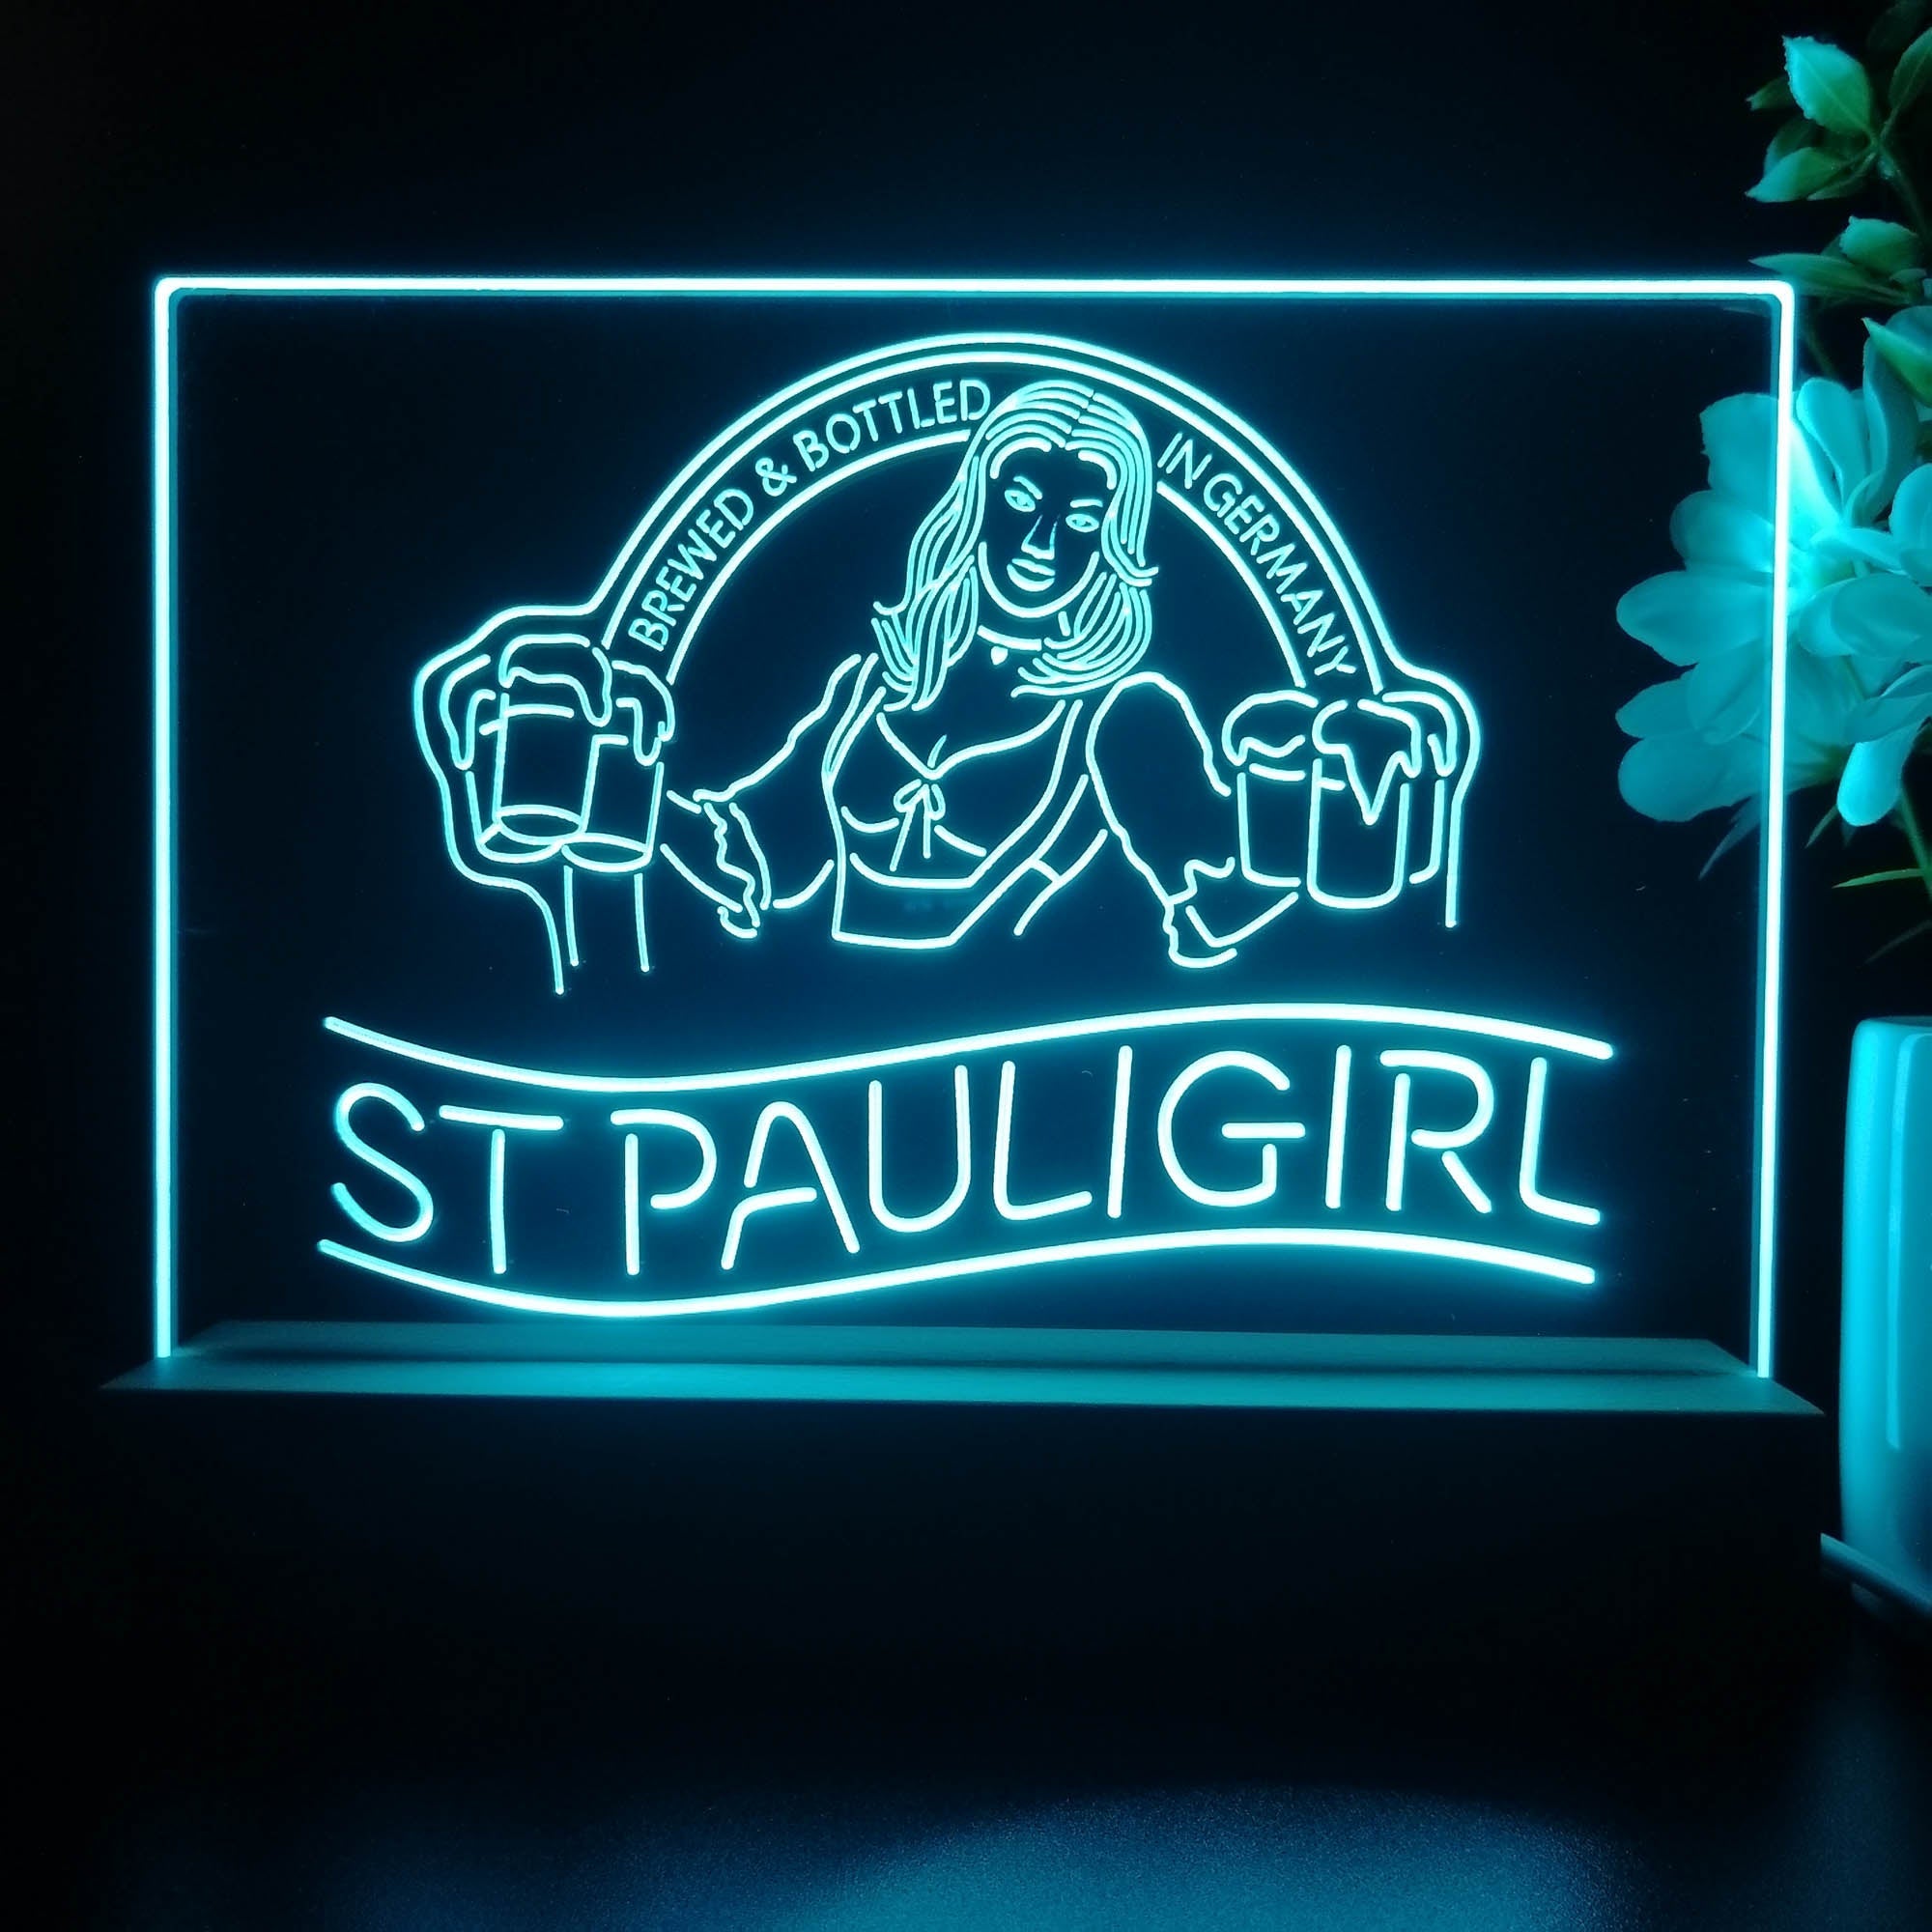 St. Paul Girl Man Cave Neon Sign Pub Bar Lamp